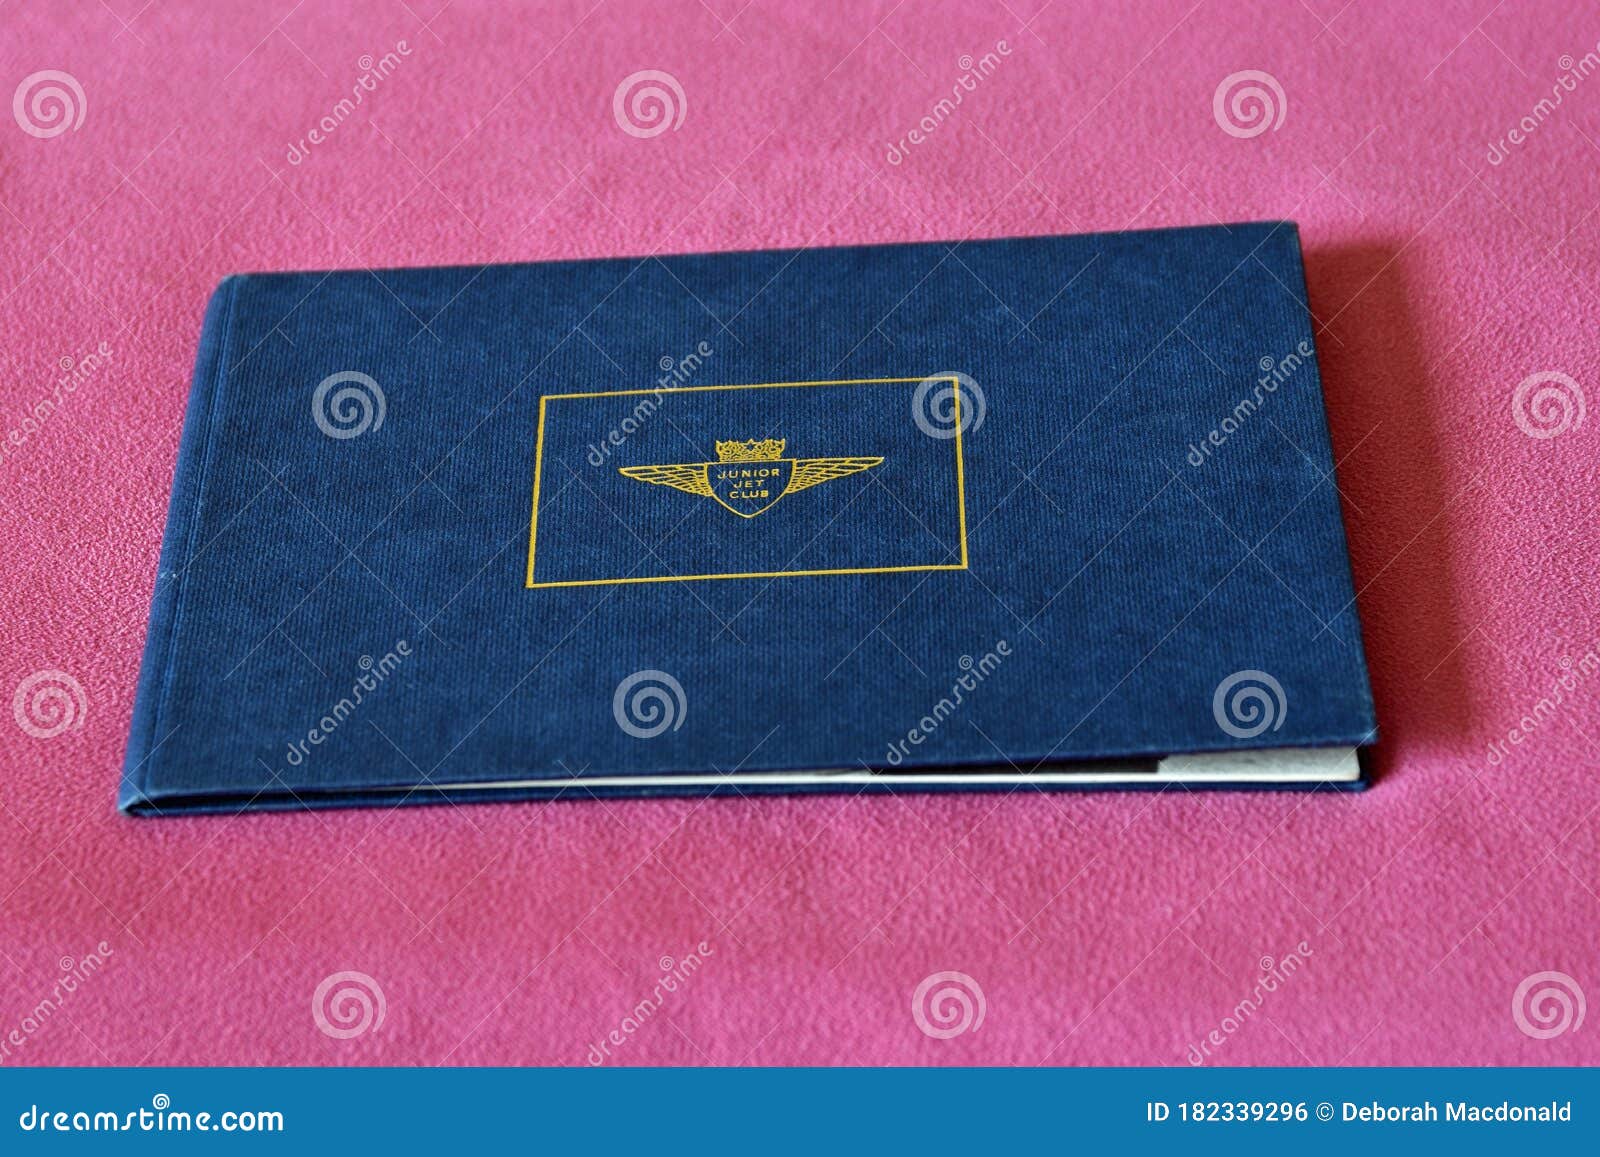 Vintage British Airways Junior Jet Club Logbook on Pink Background  Editorial Photo - Image of british, logo: 182339296